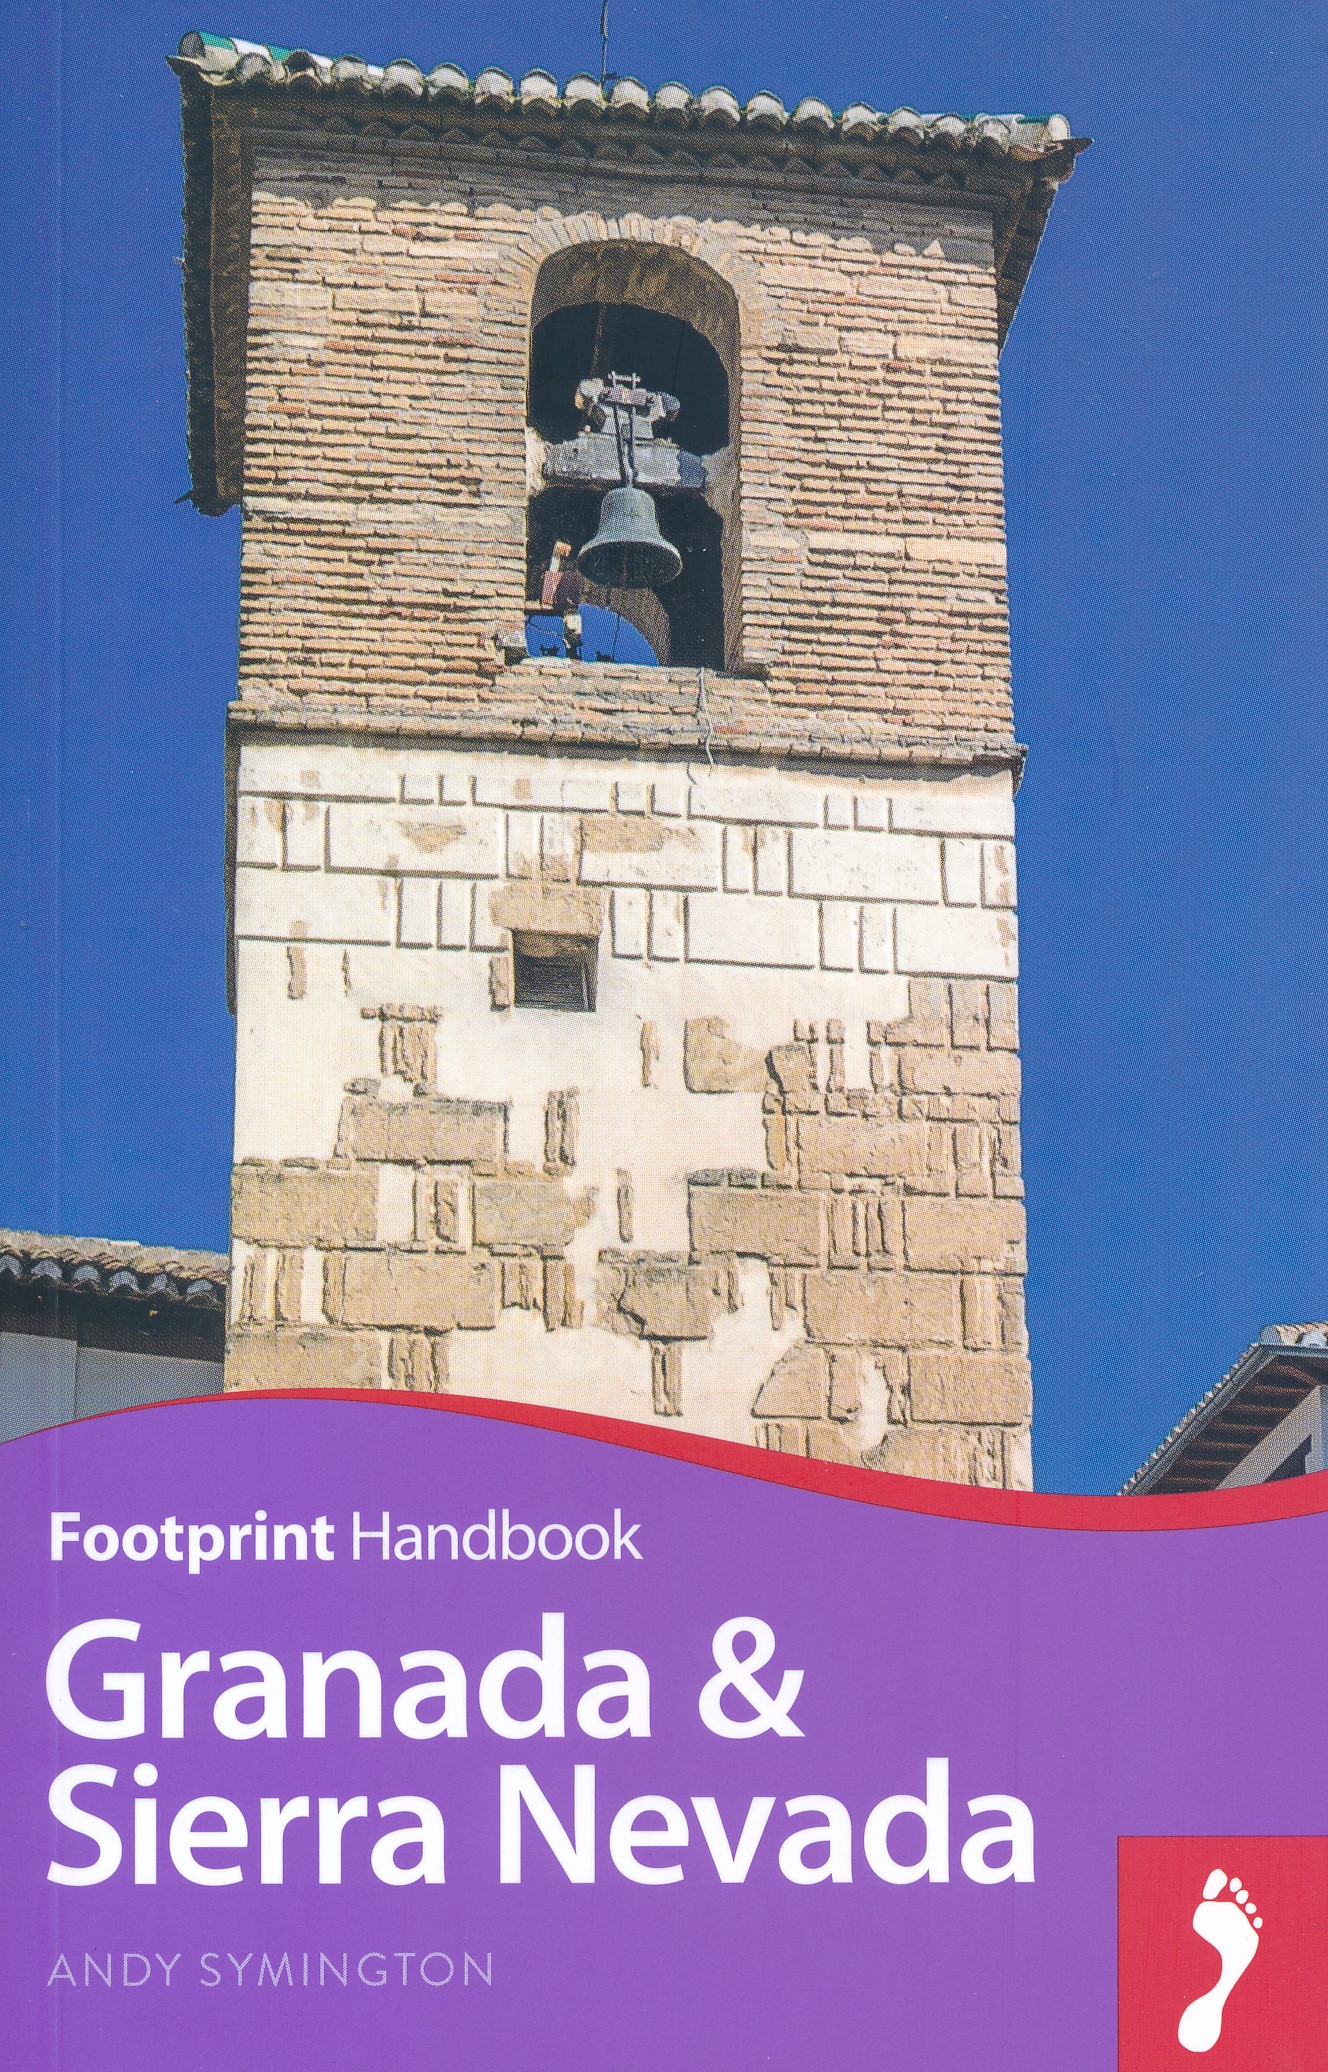 Online bestellen: Reisgids Handbook Granada & Sierra Nevada | Footprint